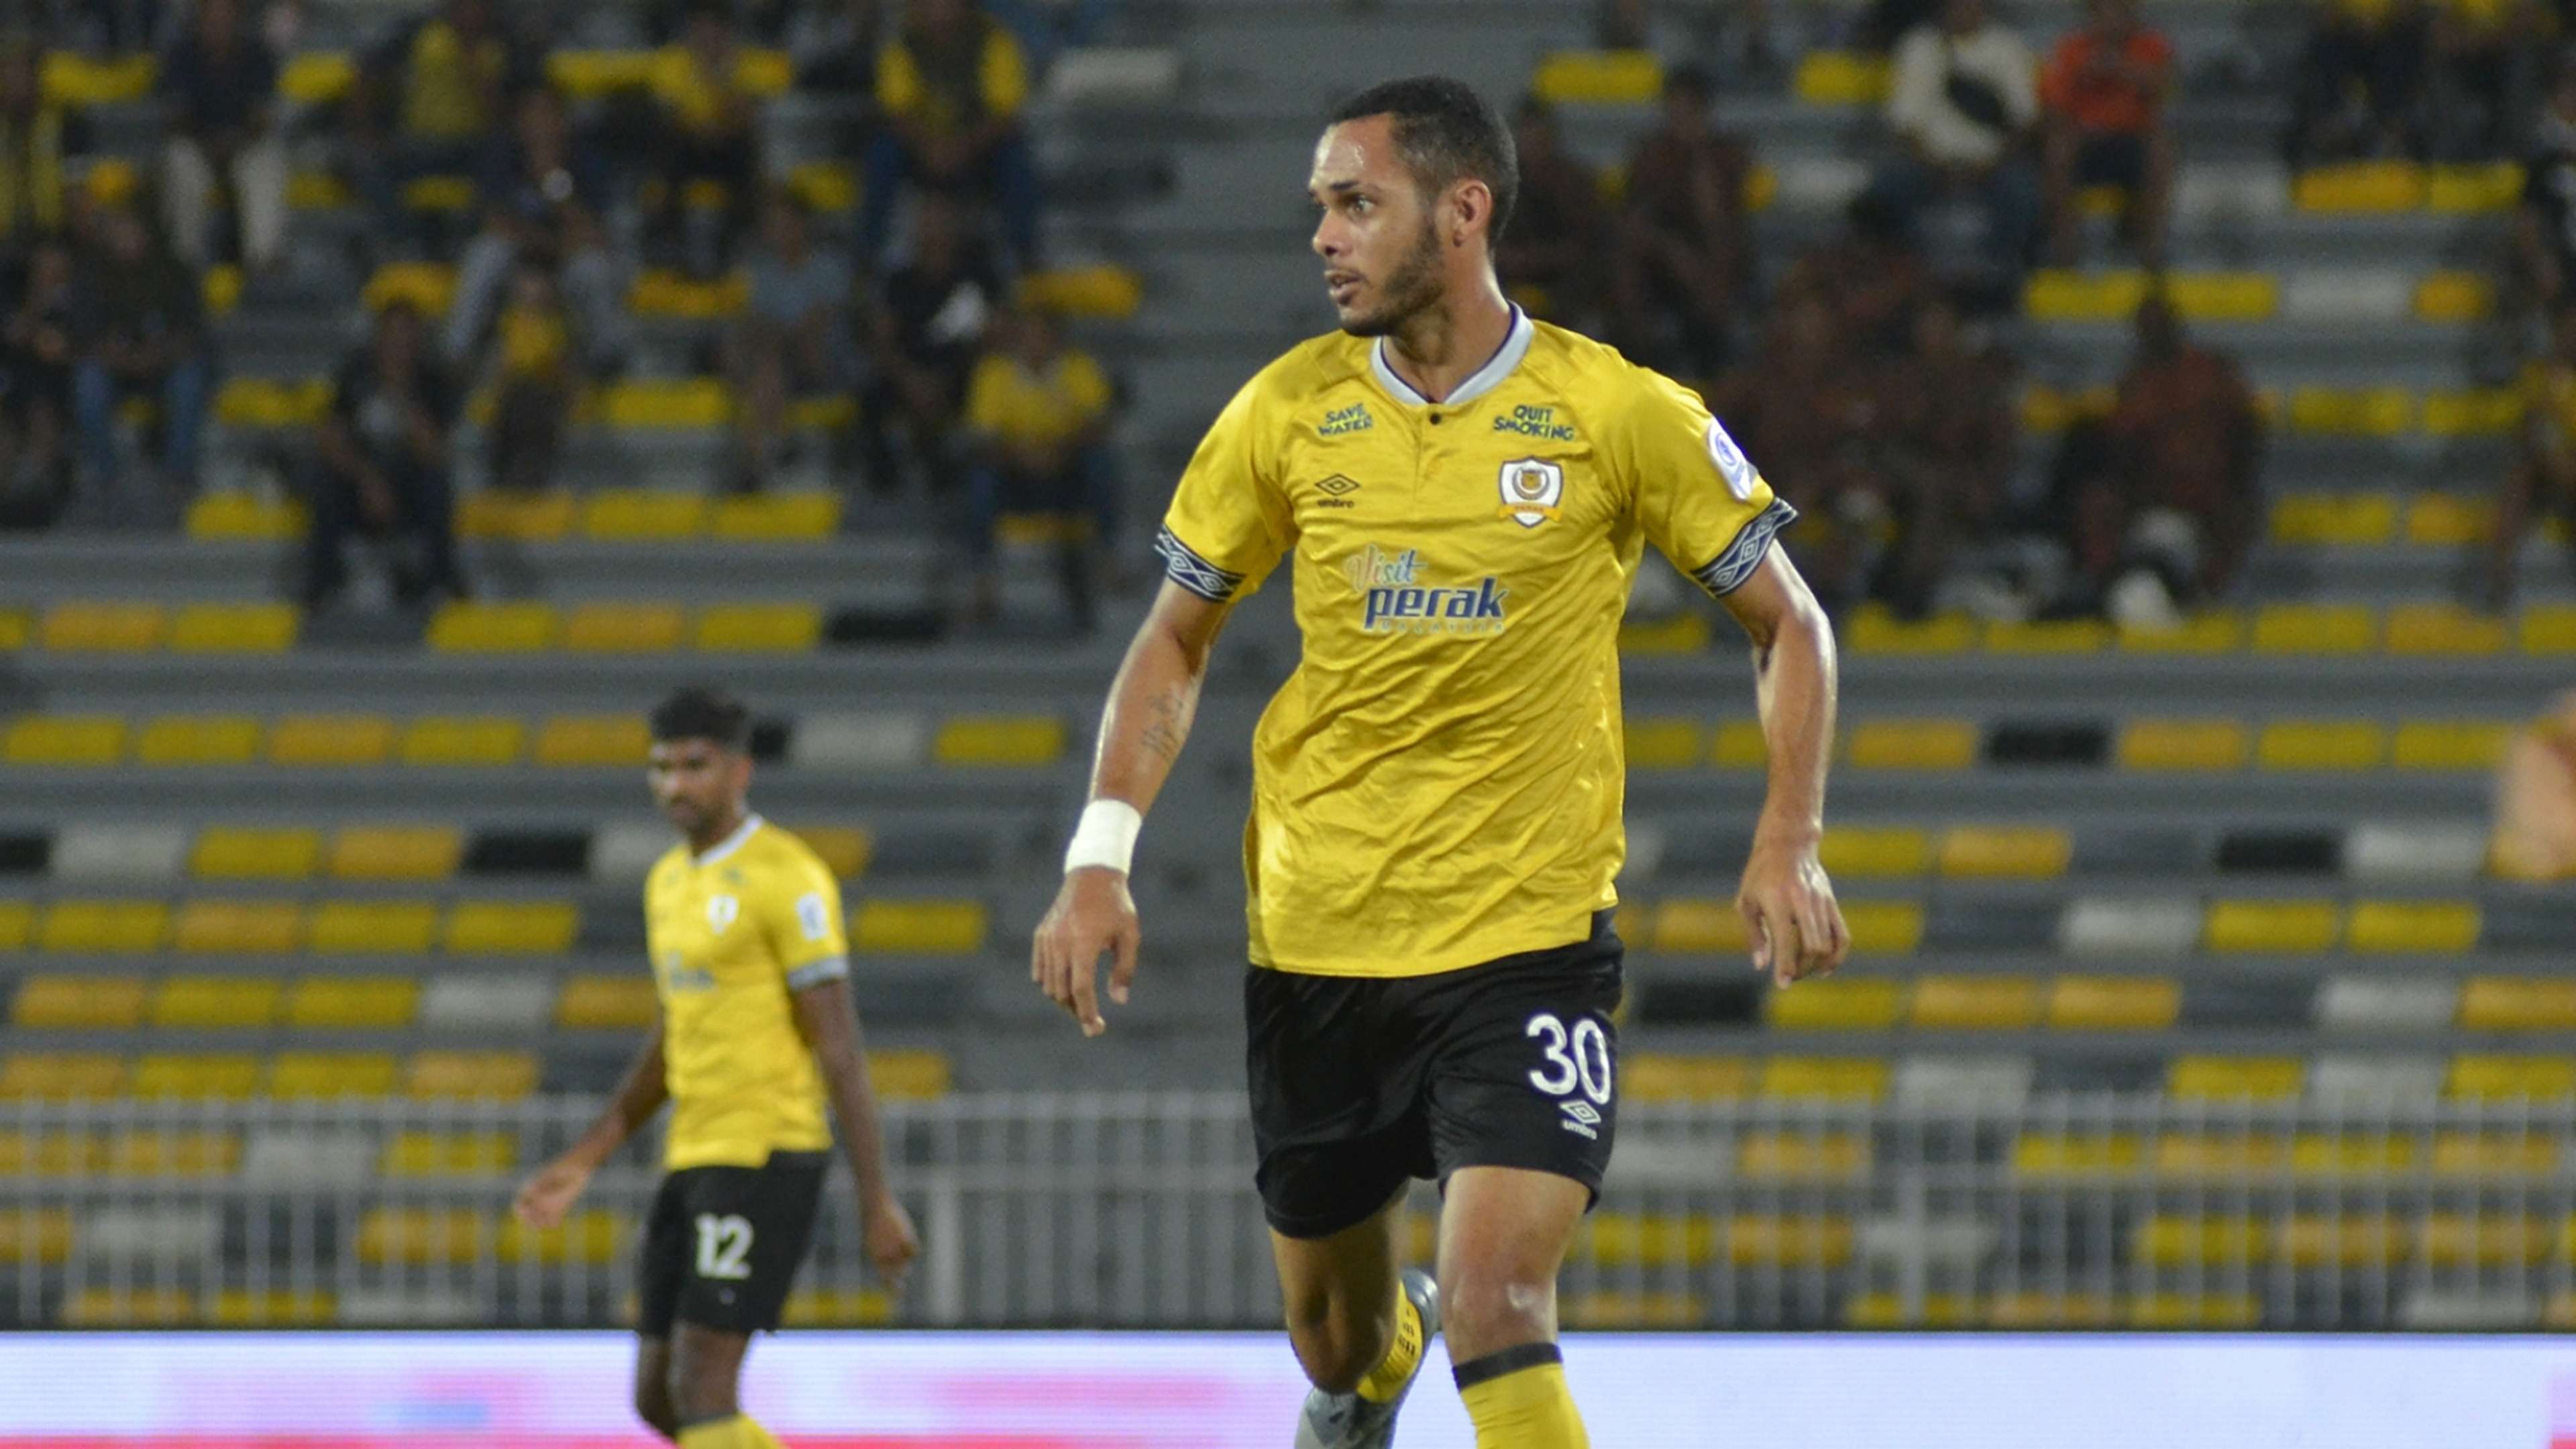 Raianderson da Costa Morais, Perak v Terengganu FC, Malaysia Super League, 18 Jun 2019